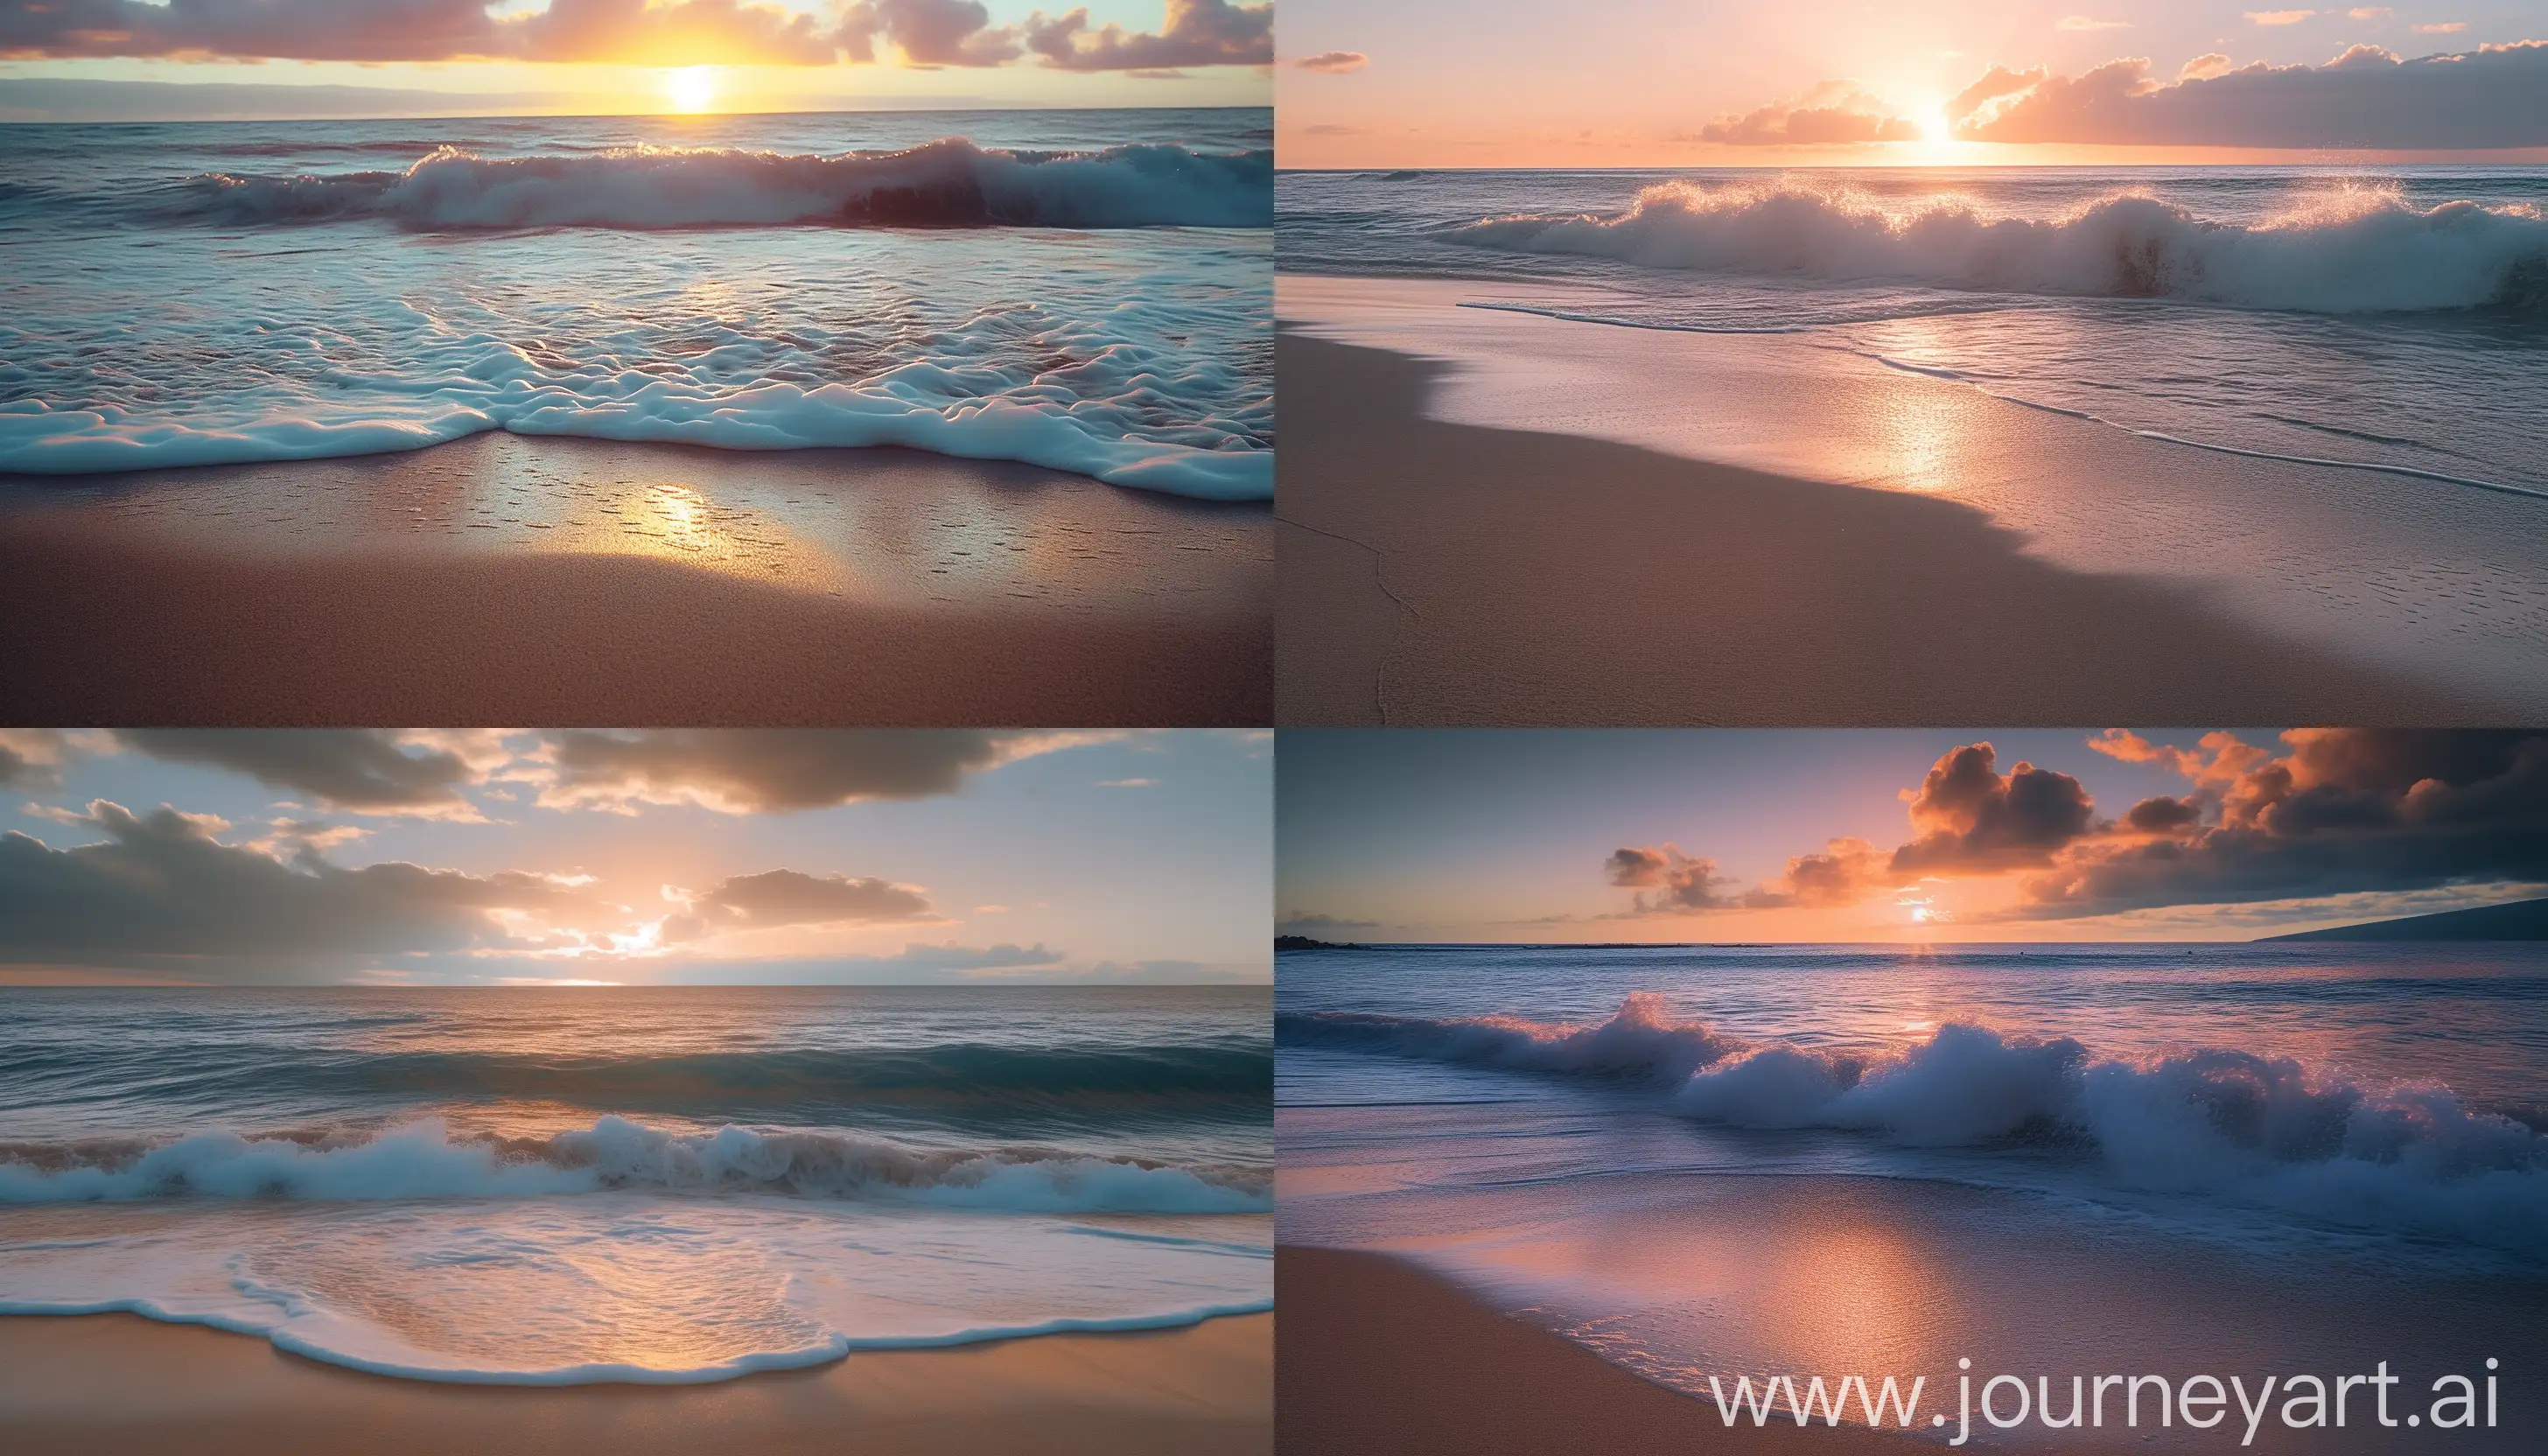 Cinematic-Dawn-Salty-Waves-on-Beach-Sand-Pearl-Harbor-Style